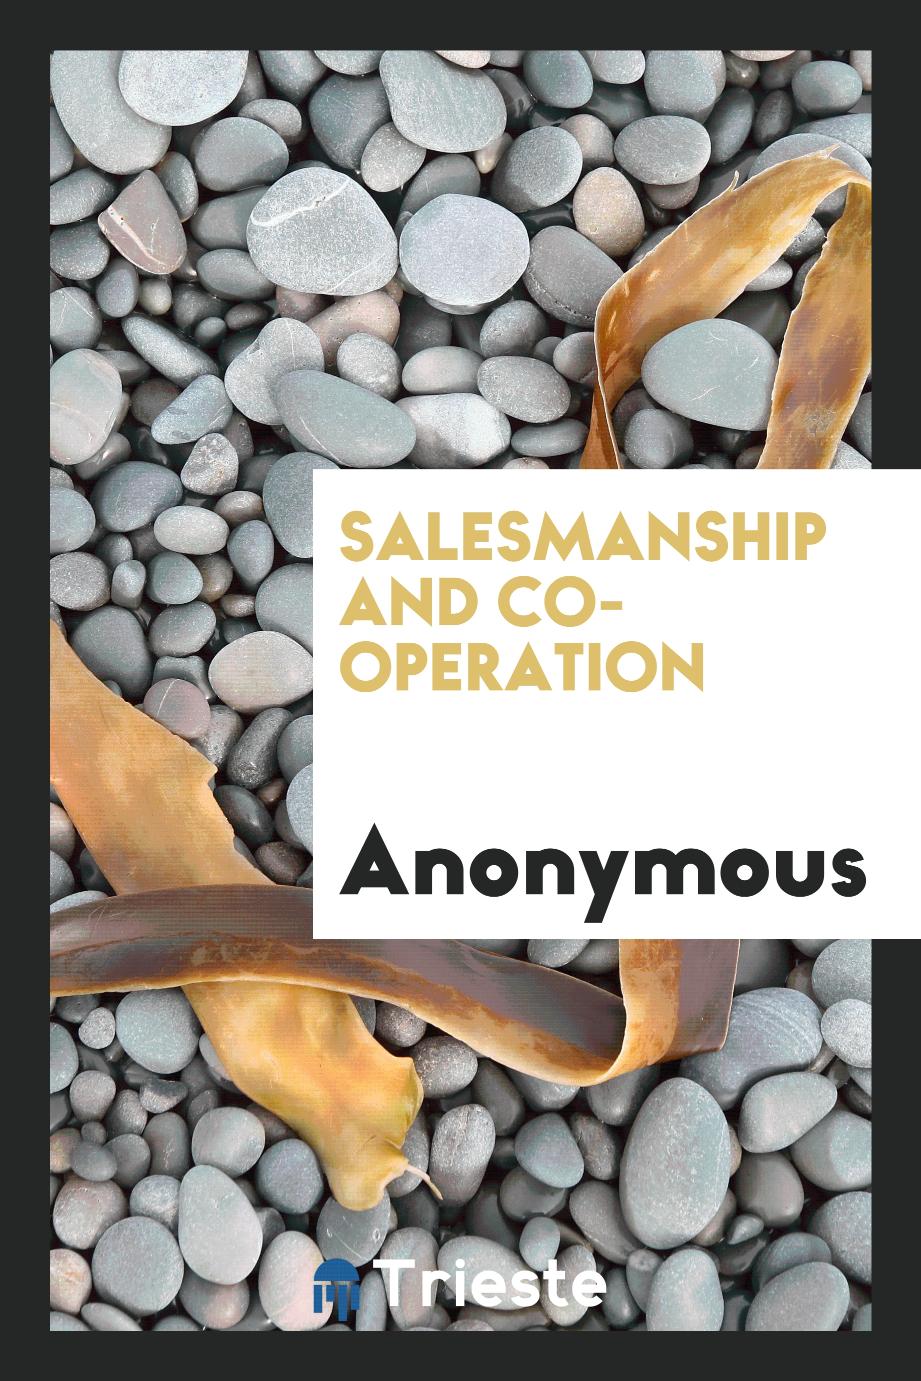 Salesmanship and co-operation